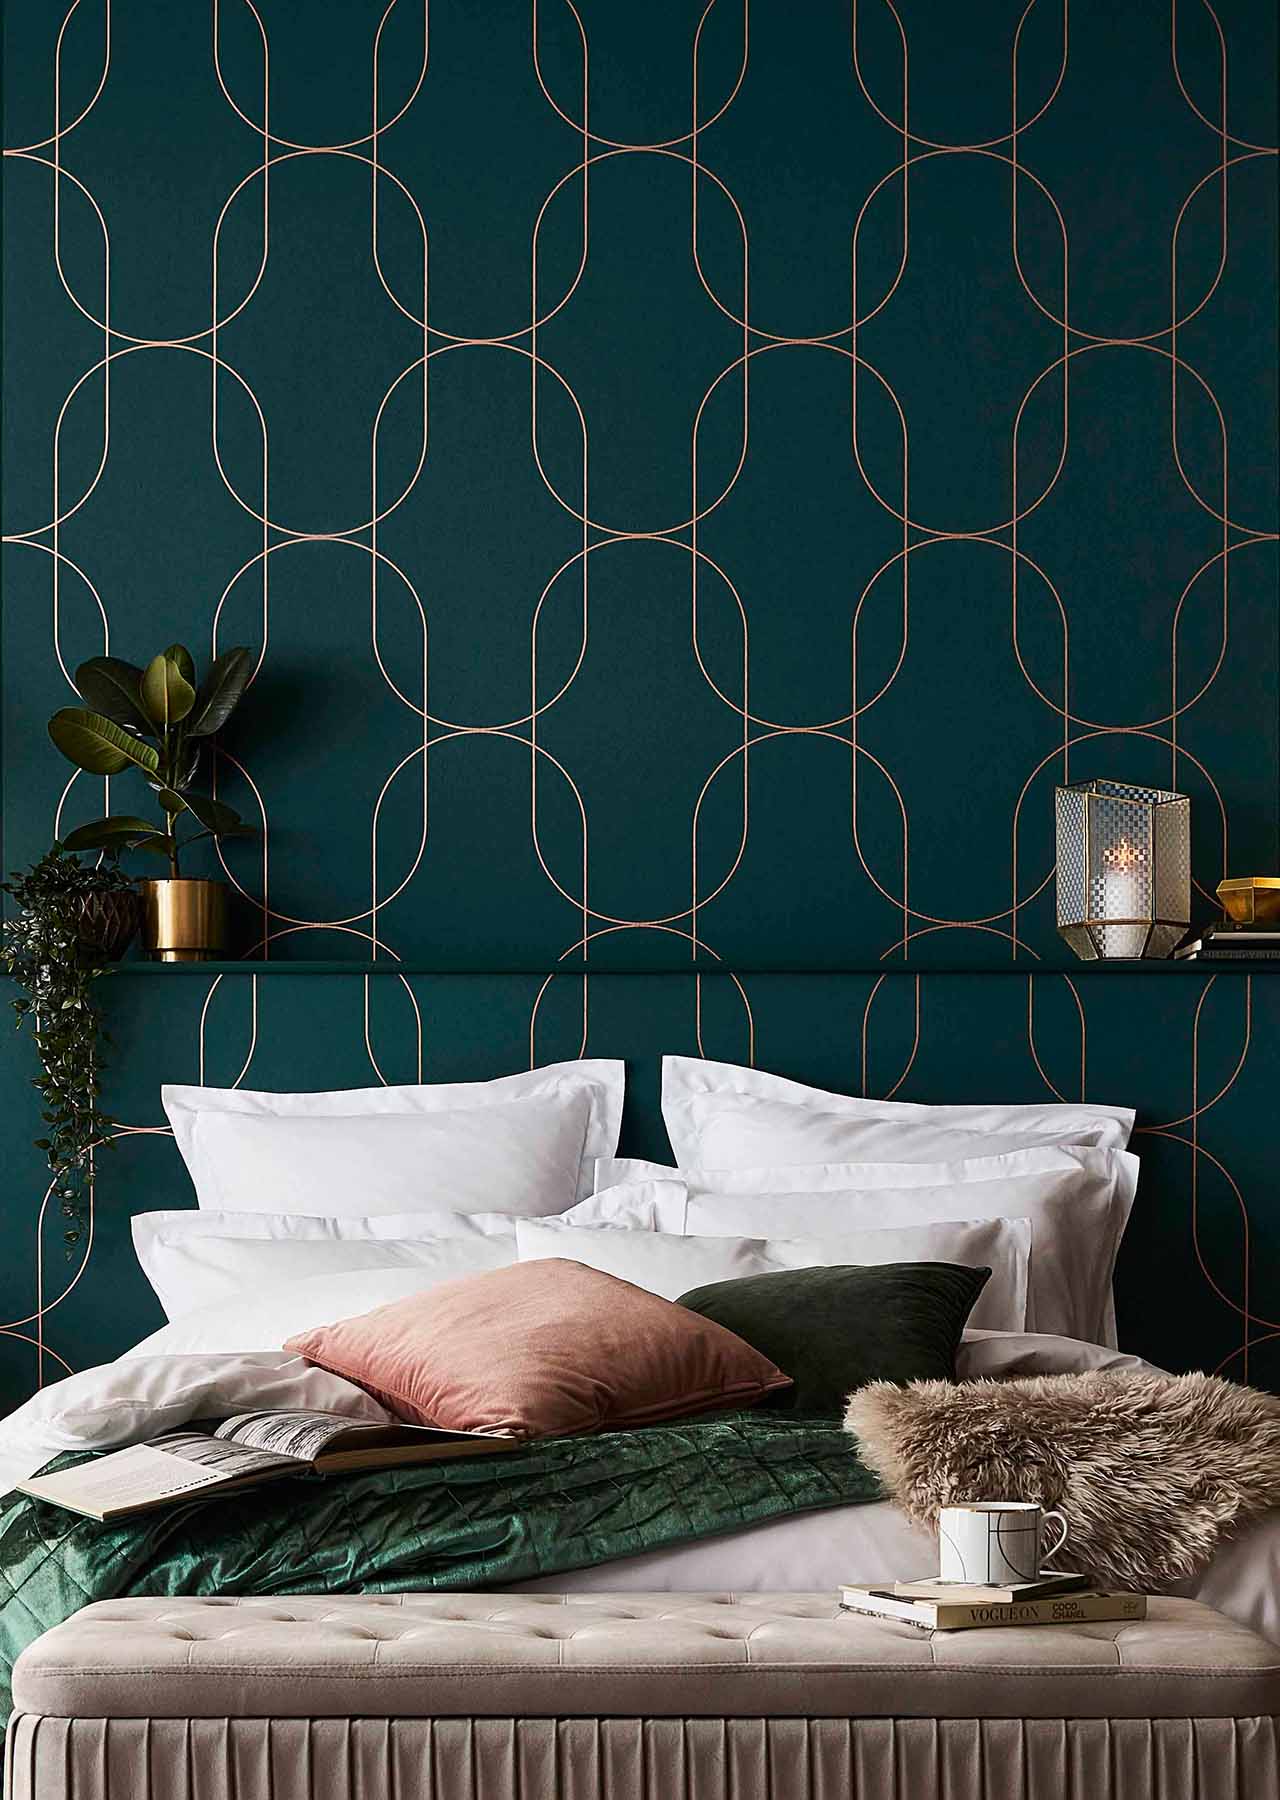 Luxury 3D Wallpaper Mural Walls Covering Home Decoration Living Room Bedroom  | eBay